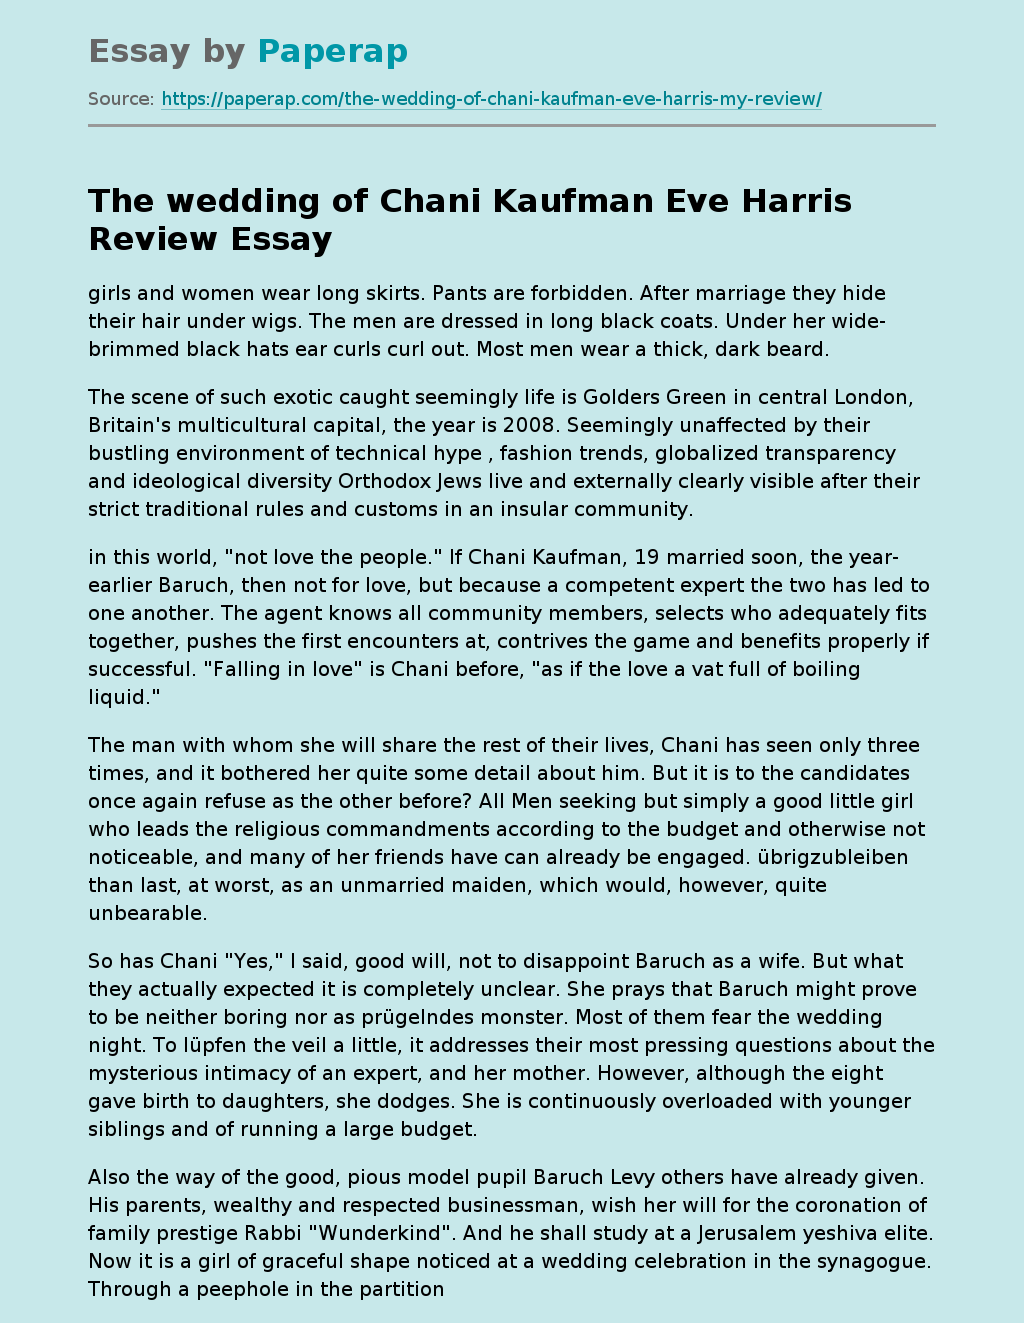 "The wedding of Chani Kaufman" be Eve Harris